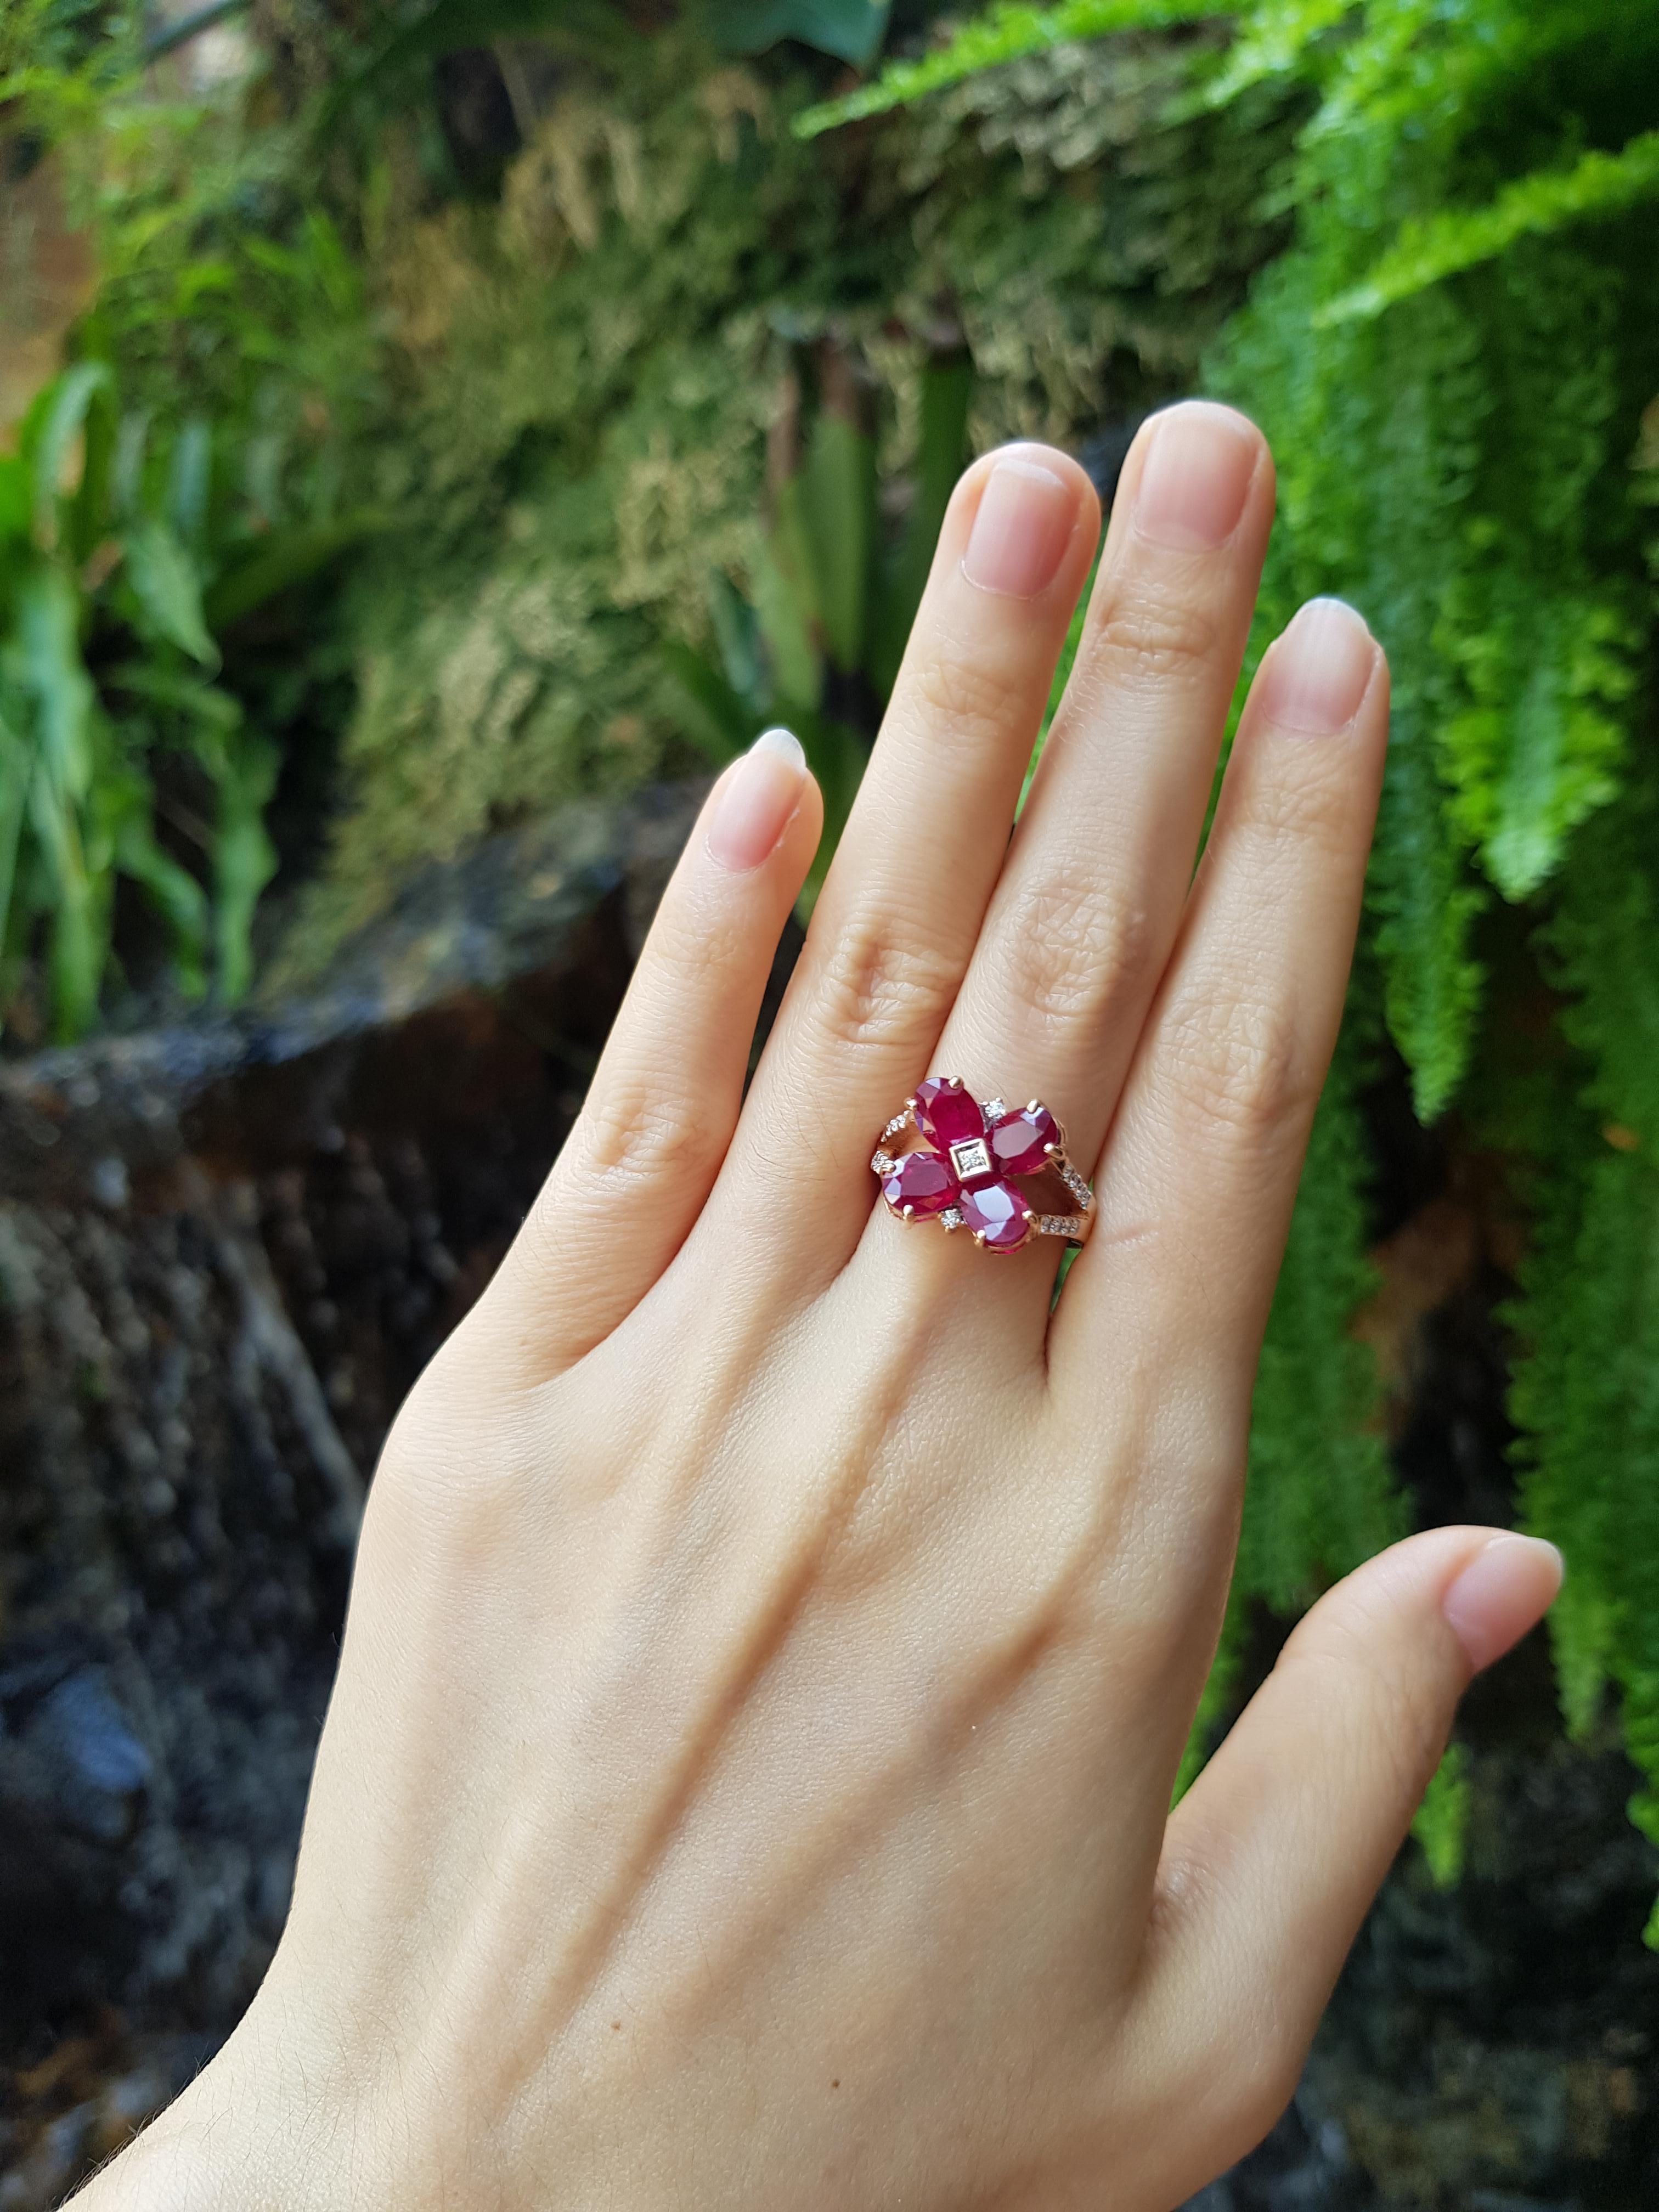 Ruby 4.74 carats with Diamond 0.18 carat Ring set in 18 Karat Rose Gold Settings

Width: 1.3 cm
Length: 1.3 cm 
Ring Size: 53

